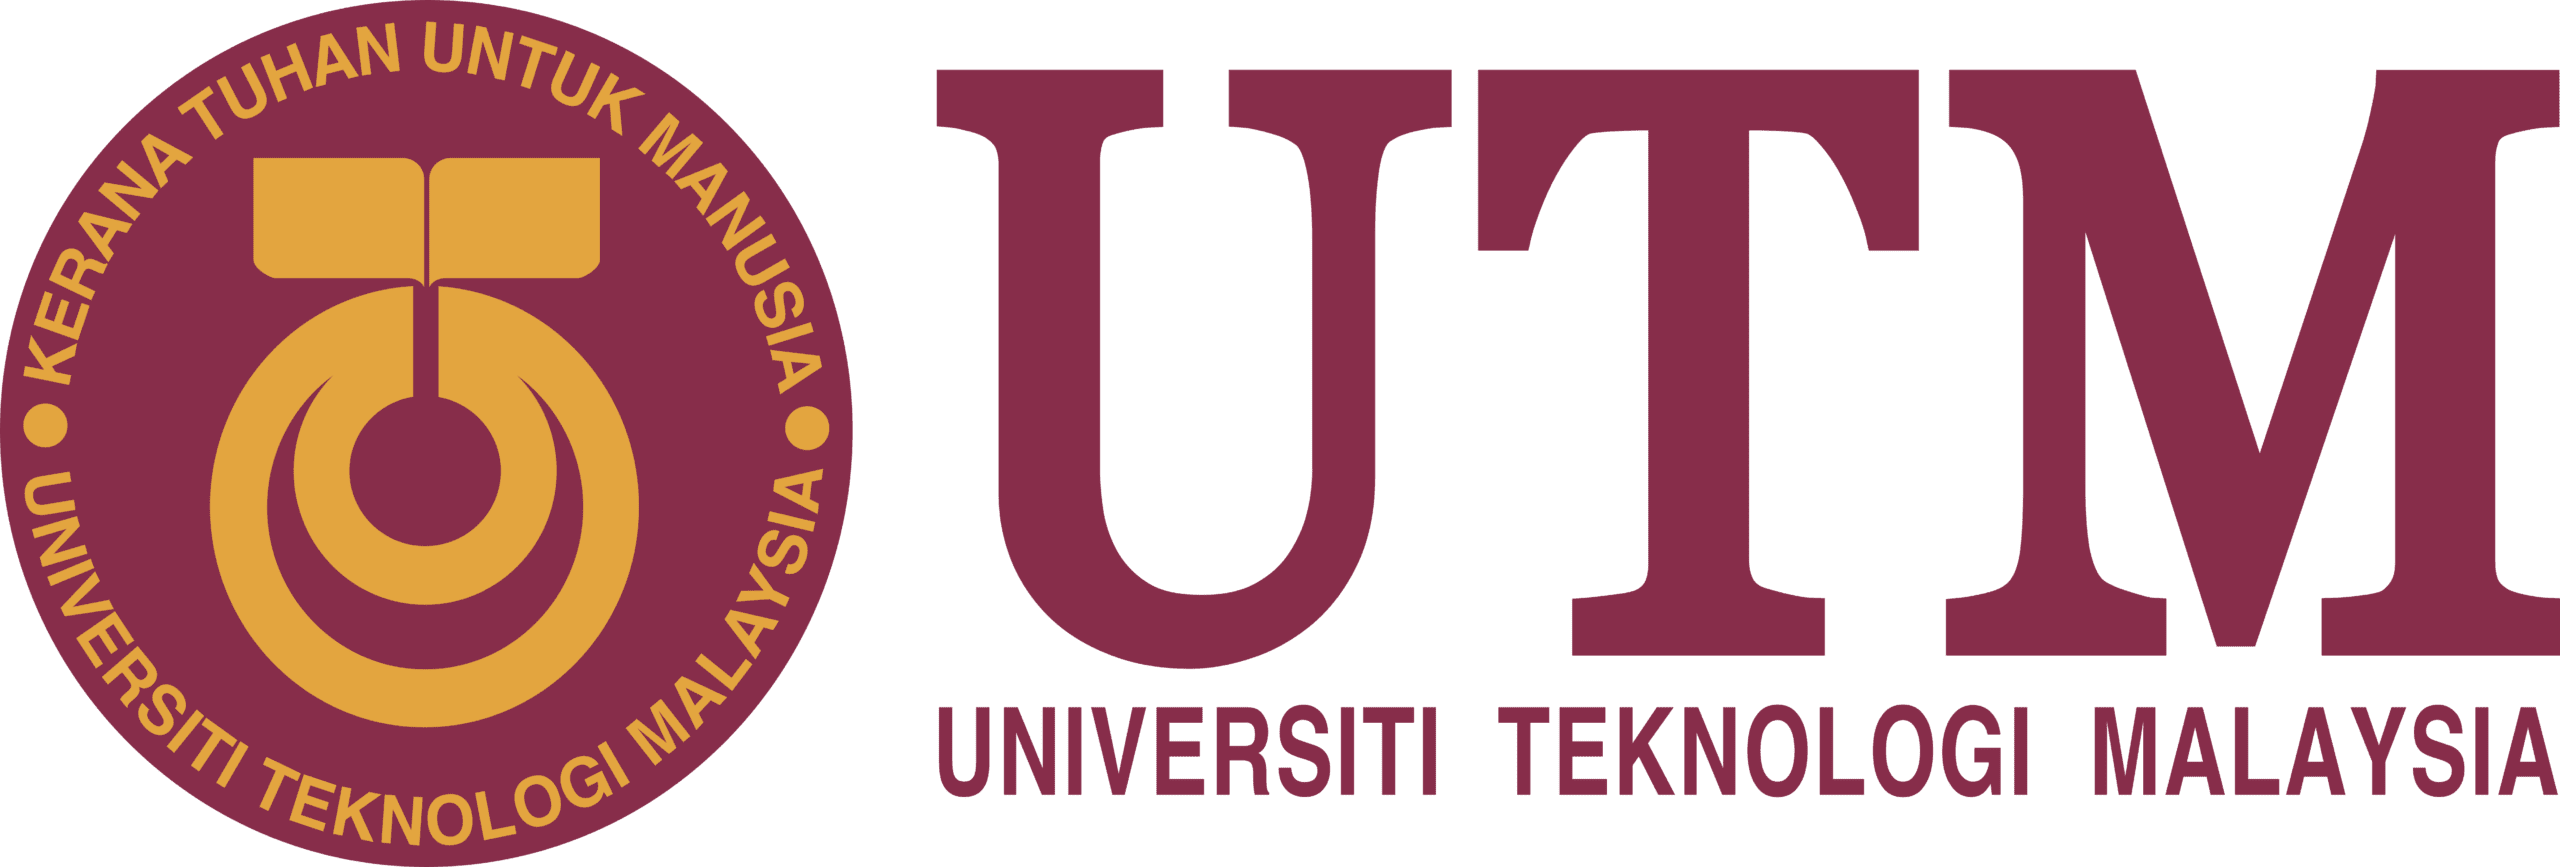 Kolej Siswa Jaya Universiti Teknologi Malaysia Kuala Lumpur